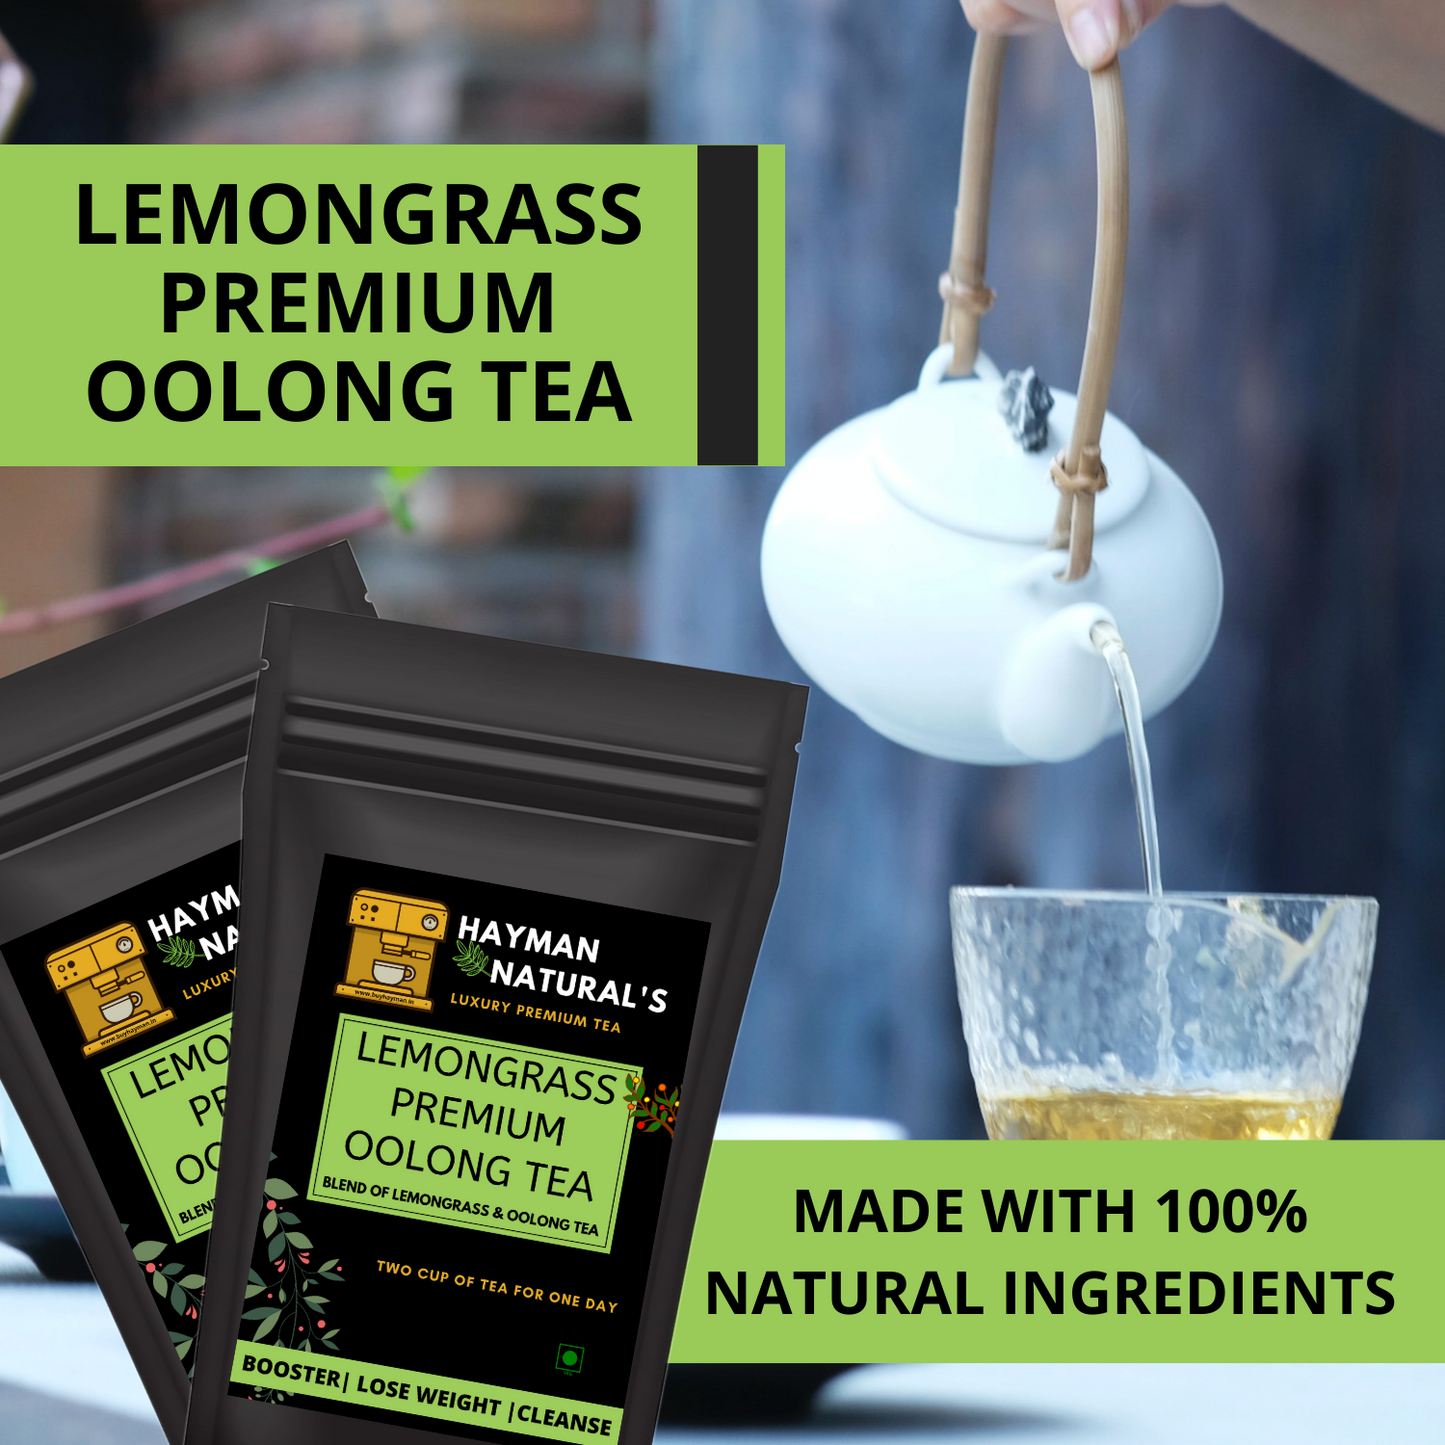 Hayman Natural's Organic Lemongrass Oolong Tea